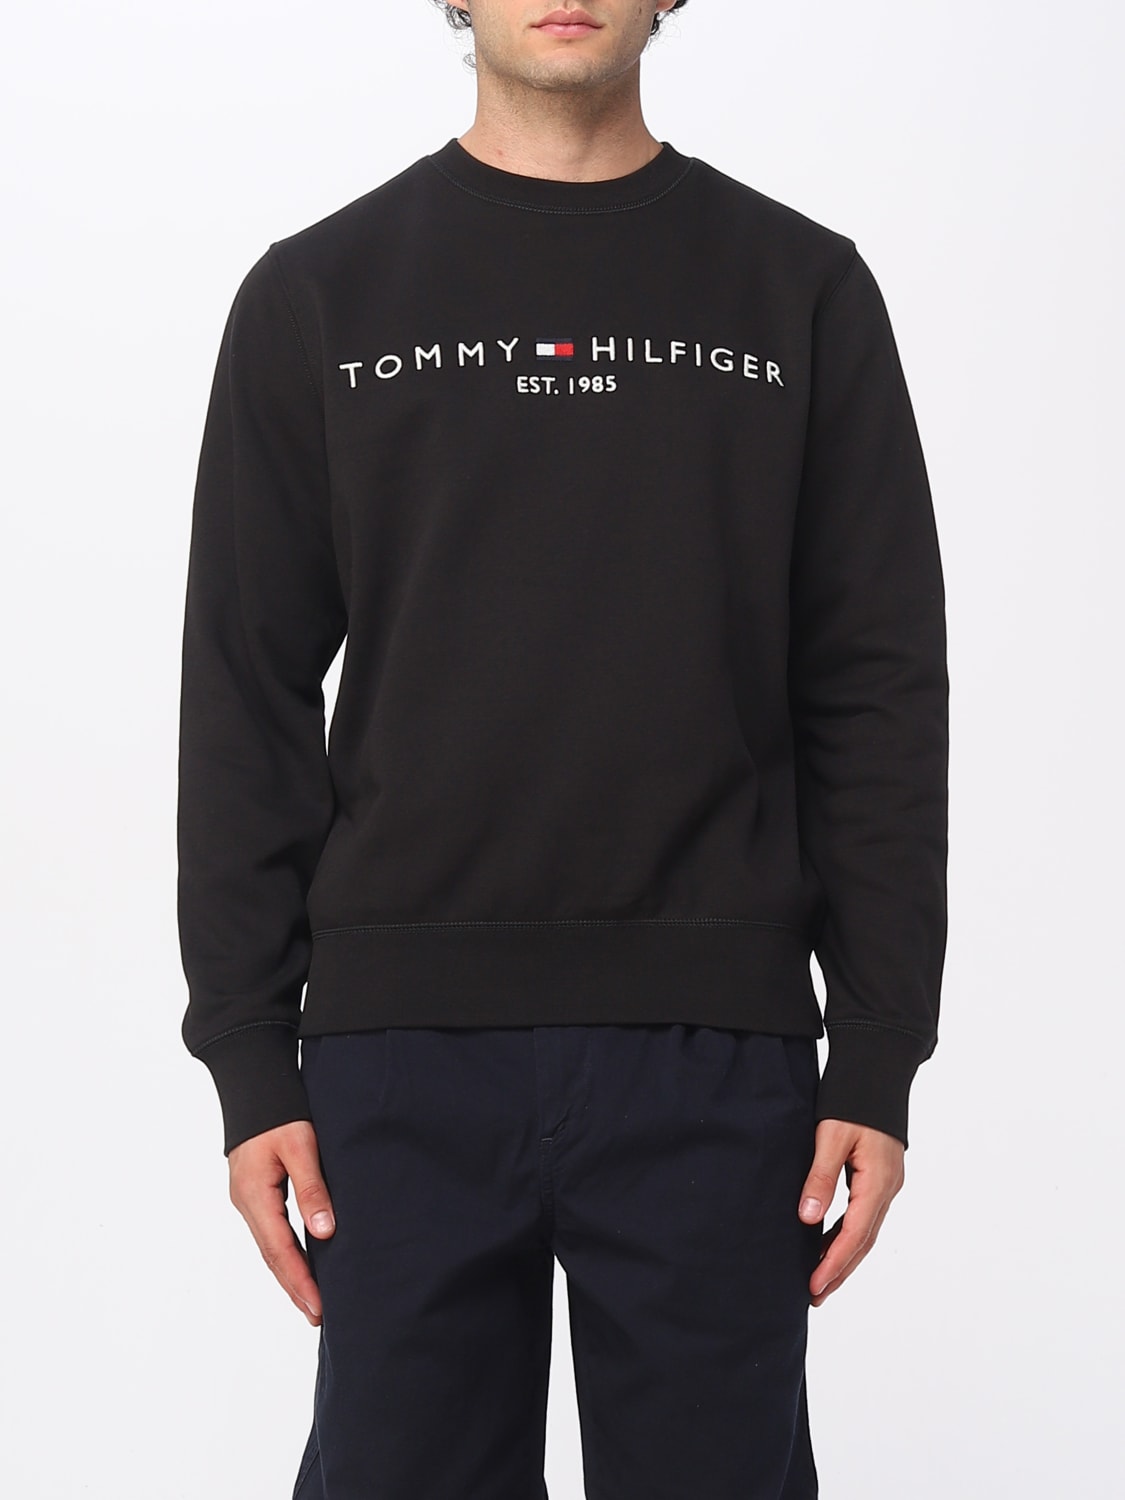 TOMMY HILFIGER: sweatshirt for man - Black | Tommy Hilfiger sweatshirt ...